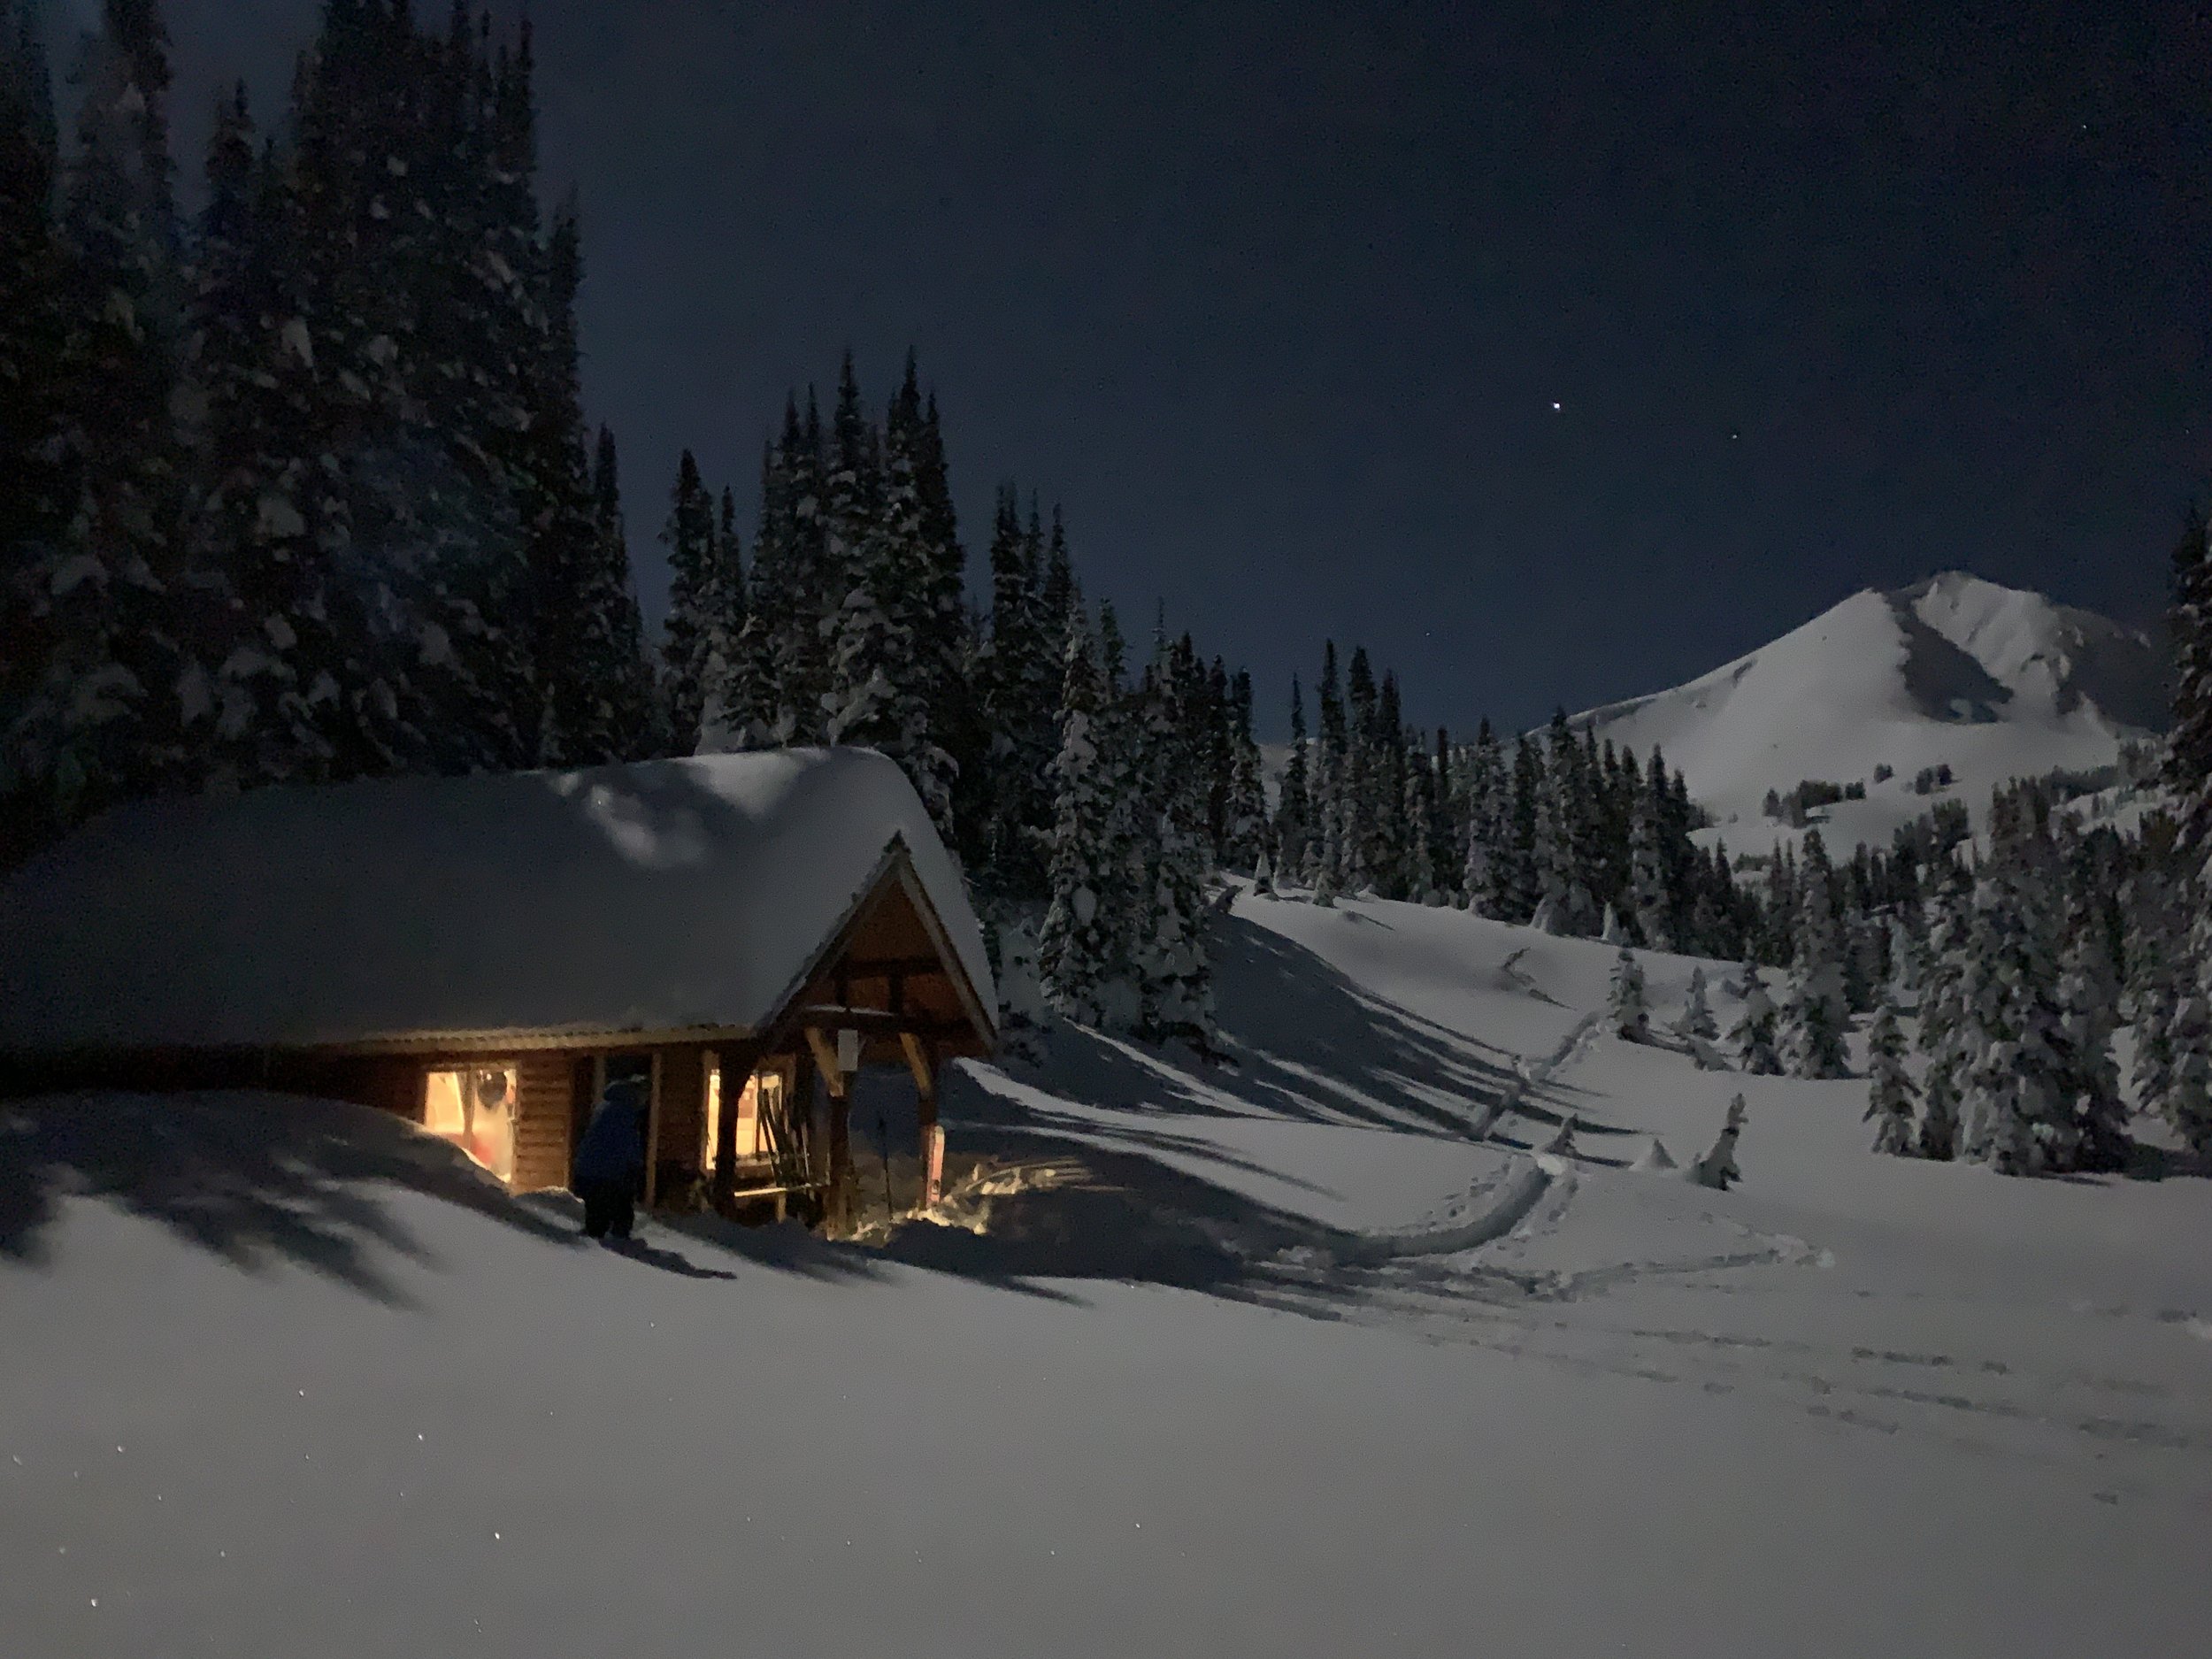 POSTED credit John Robins - eldorado cabin at night.jpeg